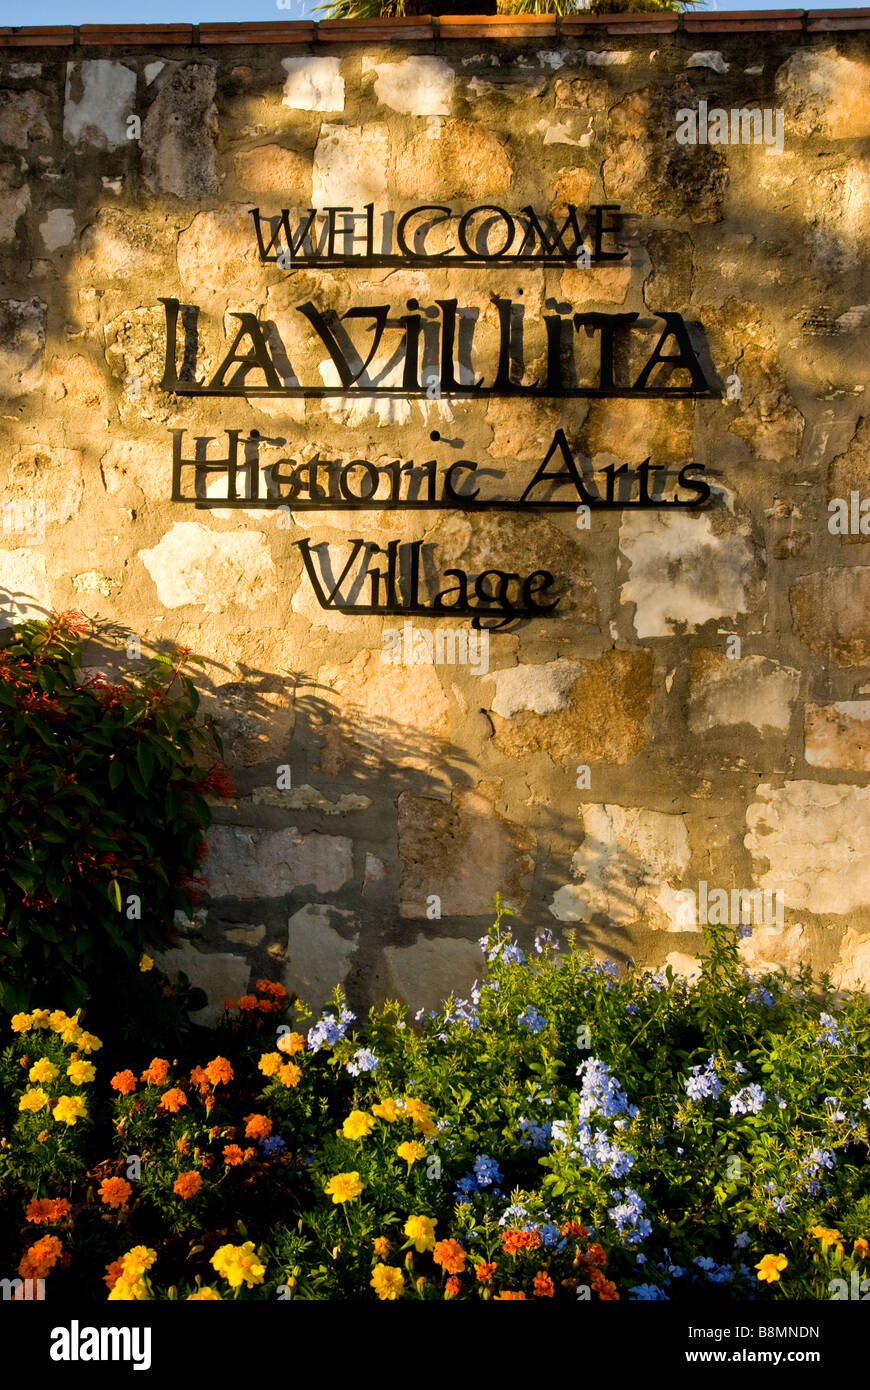 La Villita entrance sign marker San Antonio texas tx historic arts village shopping area Stock Photo